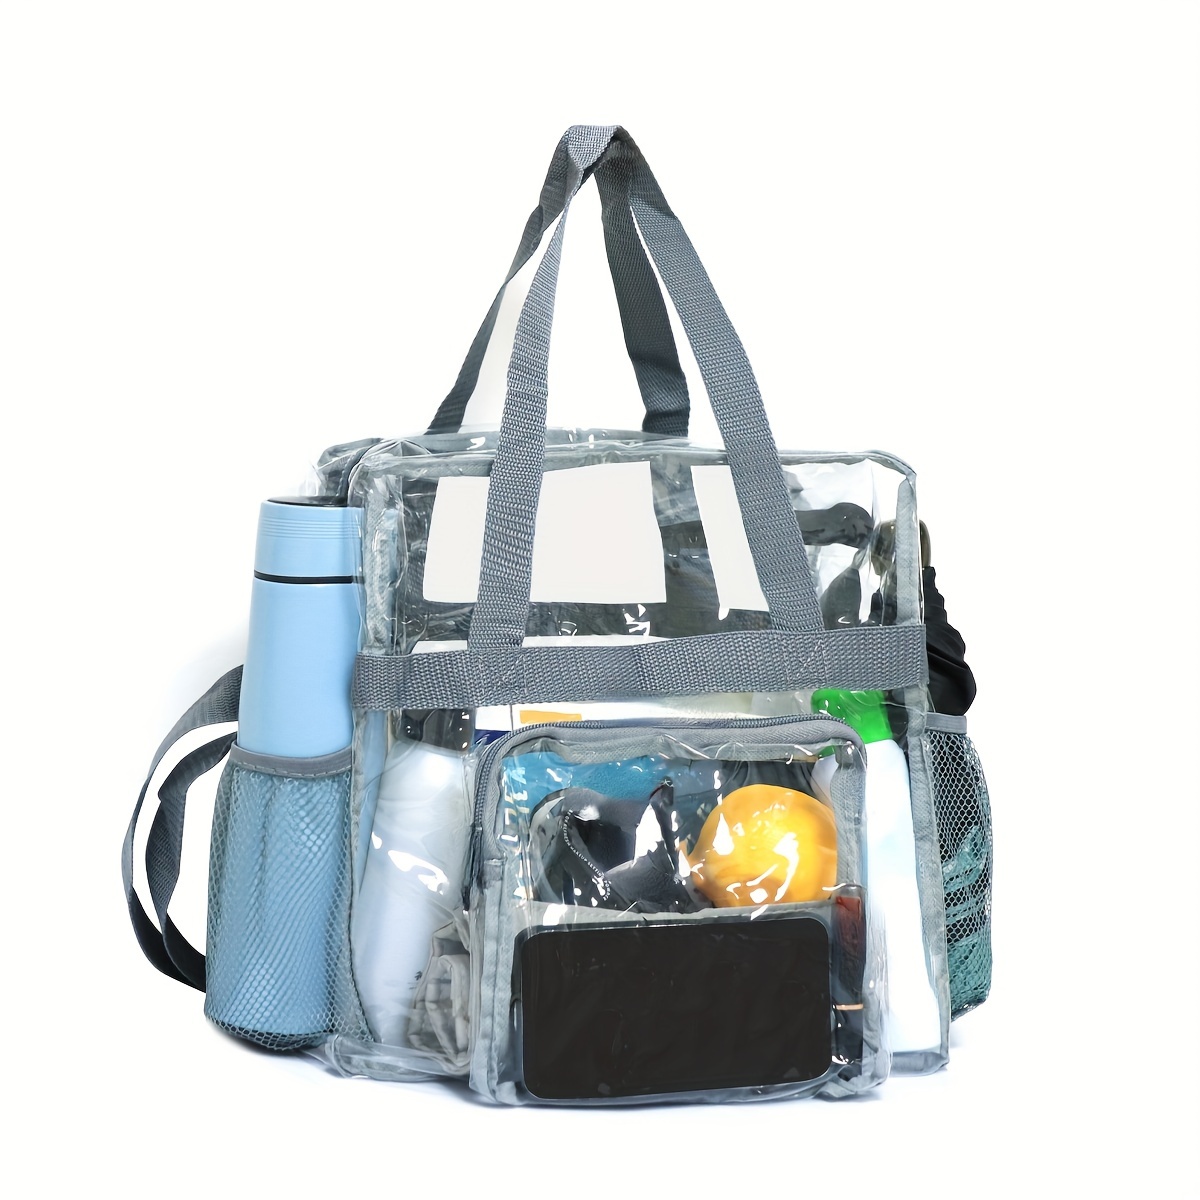  Cutora 1 Pack Clear Handbag Storage Organizers for